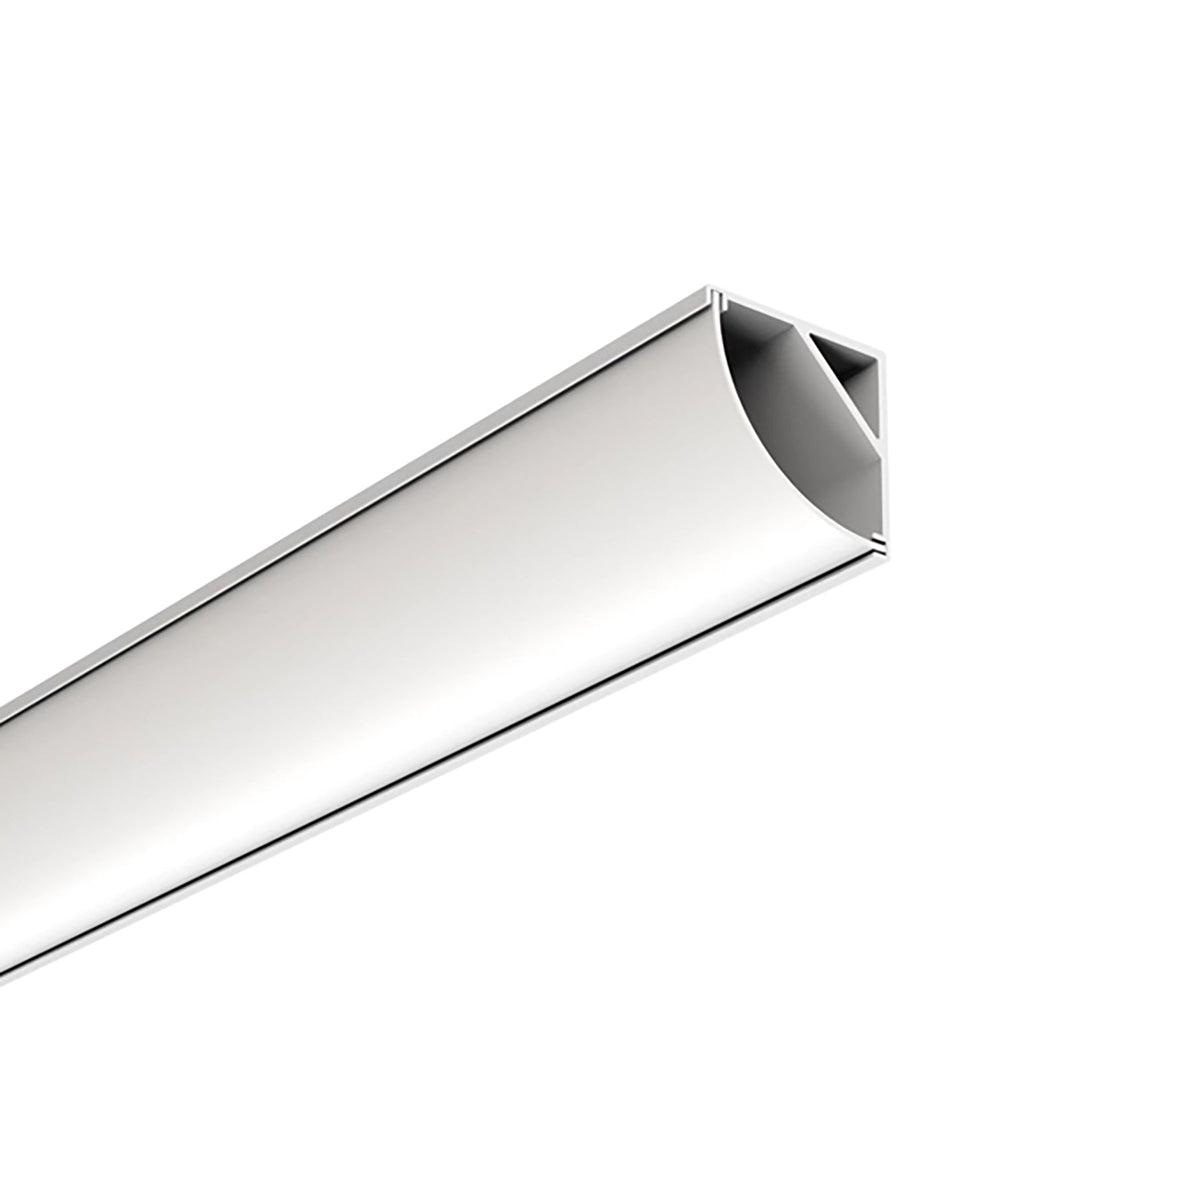 G.W.S. LED Corner LED Aluminium Profile 008-M1616